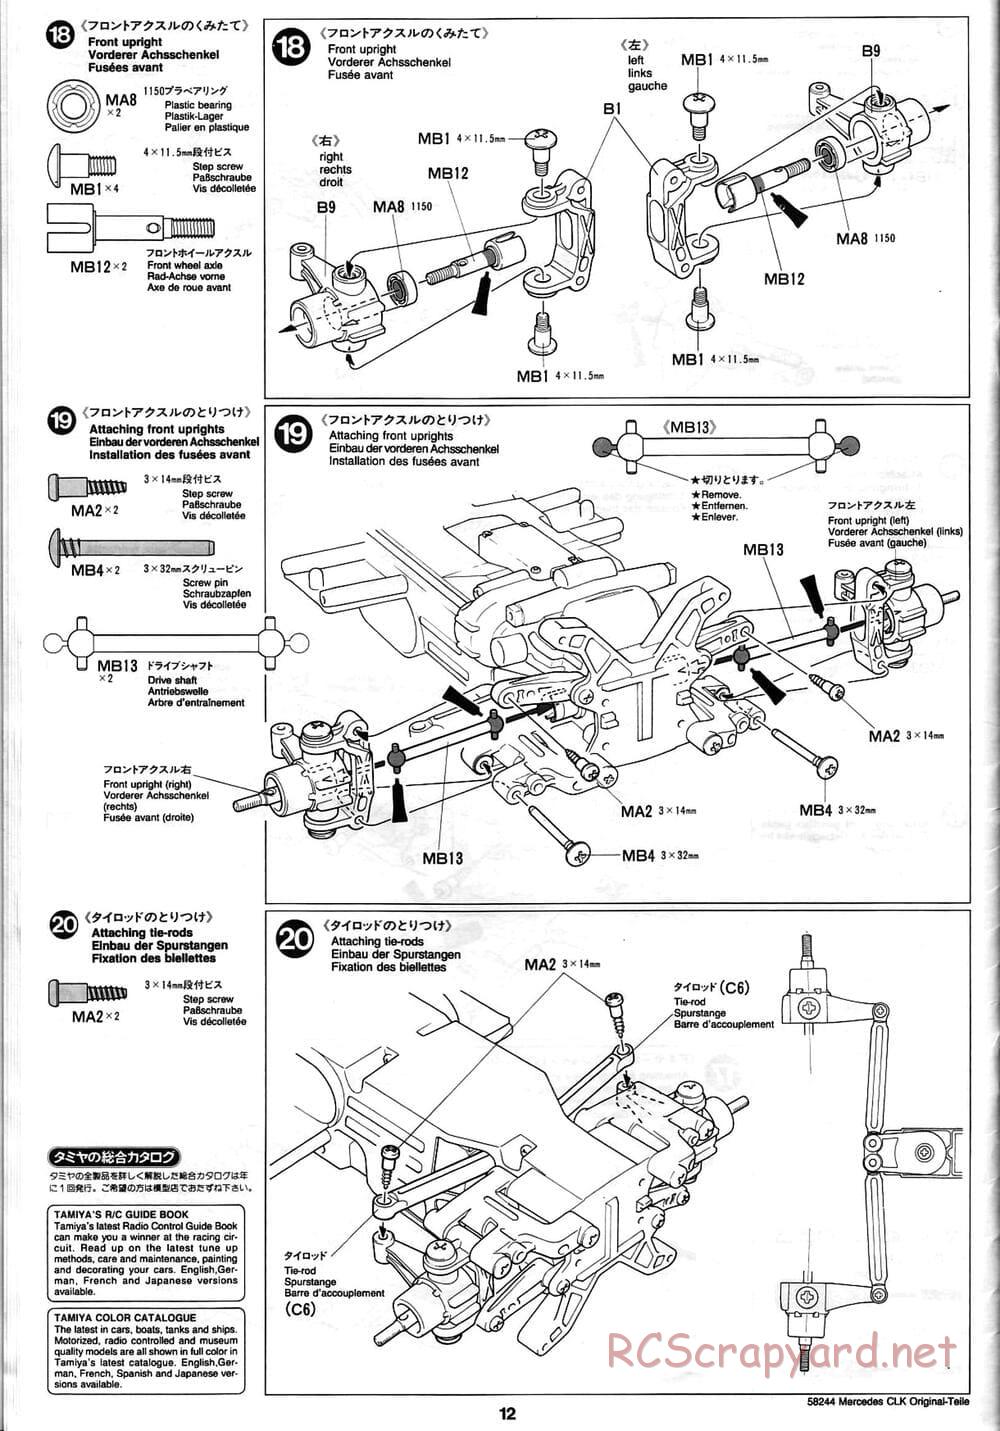 Tamiya - Mercedes CLK-GTR Original-Teile - TL-01 Chassis - Manual - Page 12